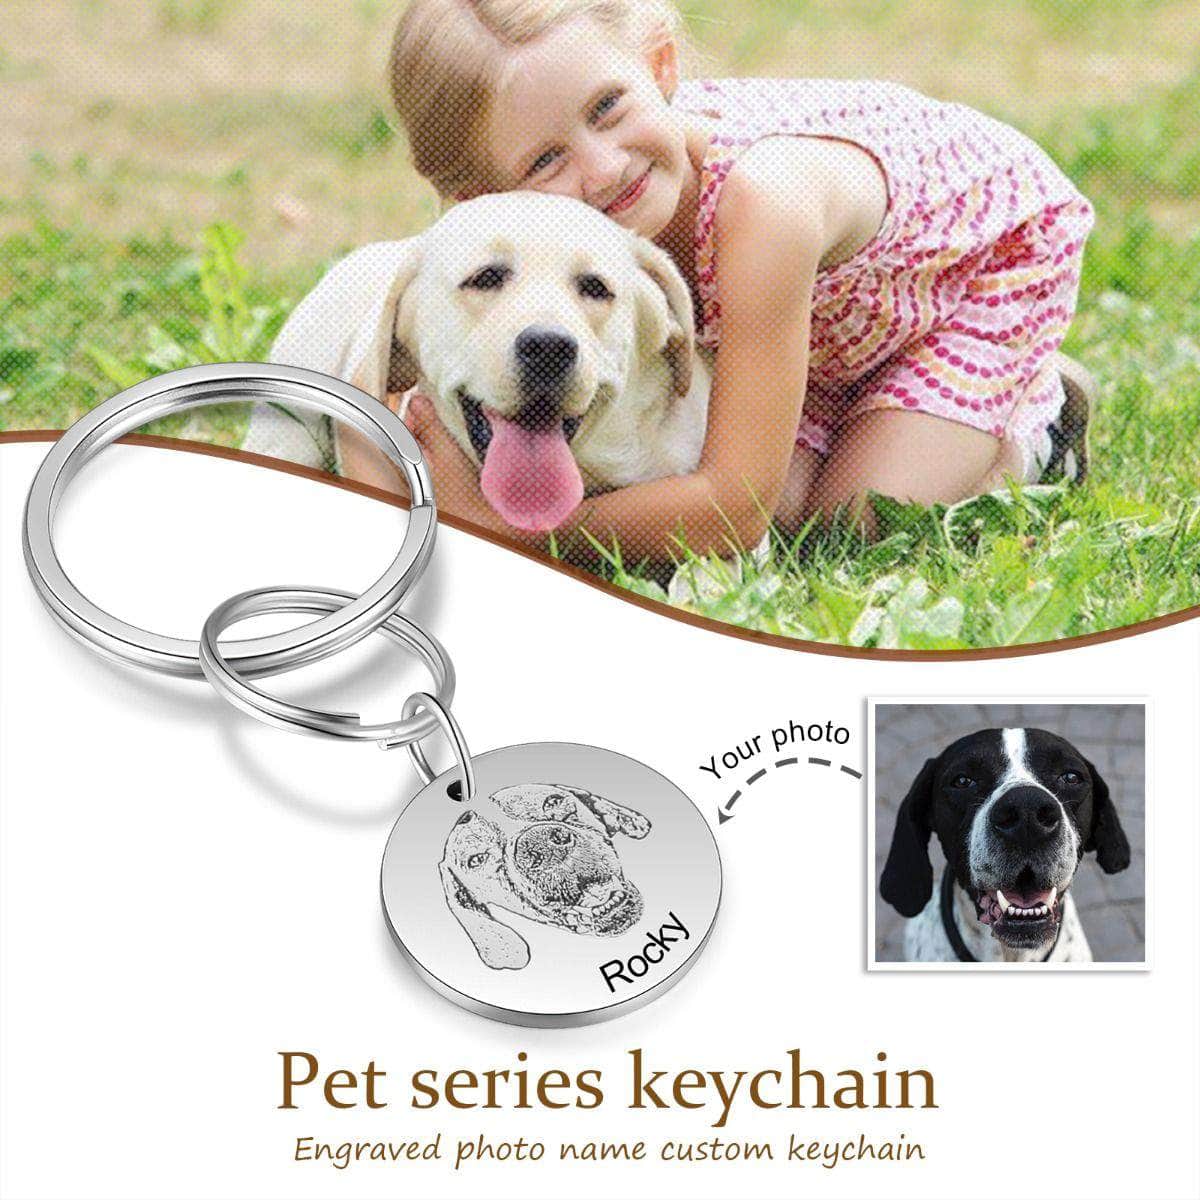 JEWEL AUS Keychains 1 Name Photo Custom Pet Key Chain